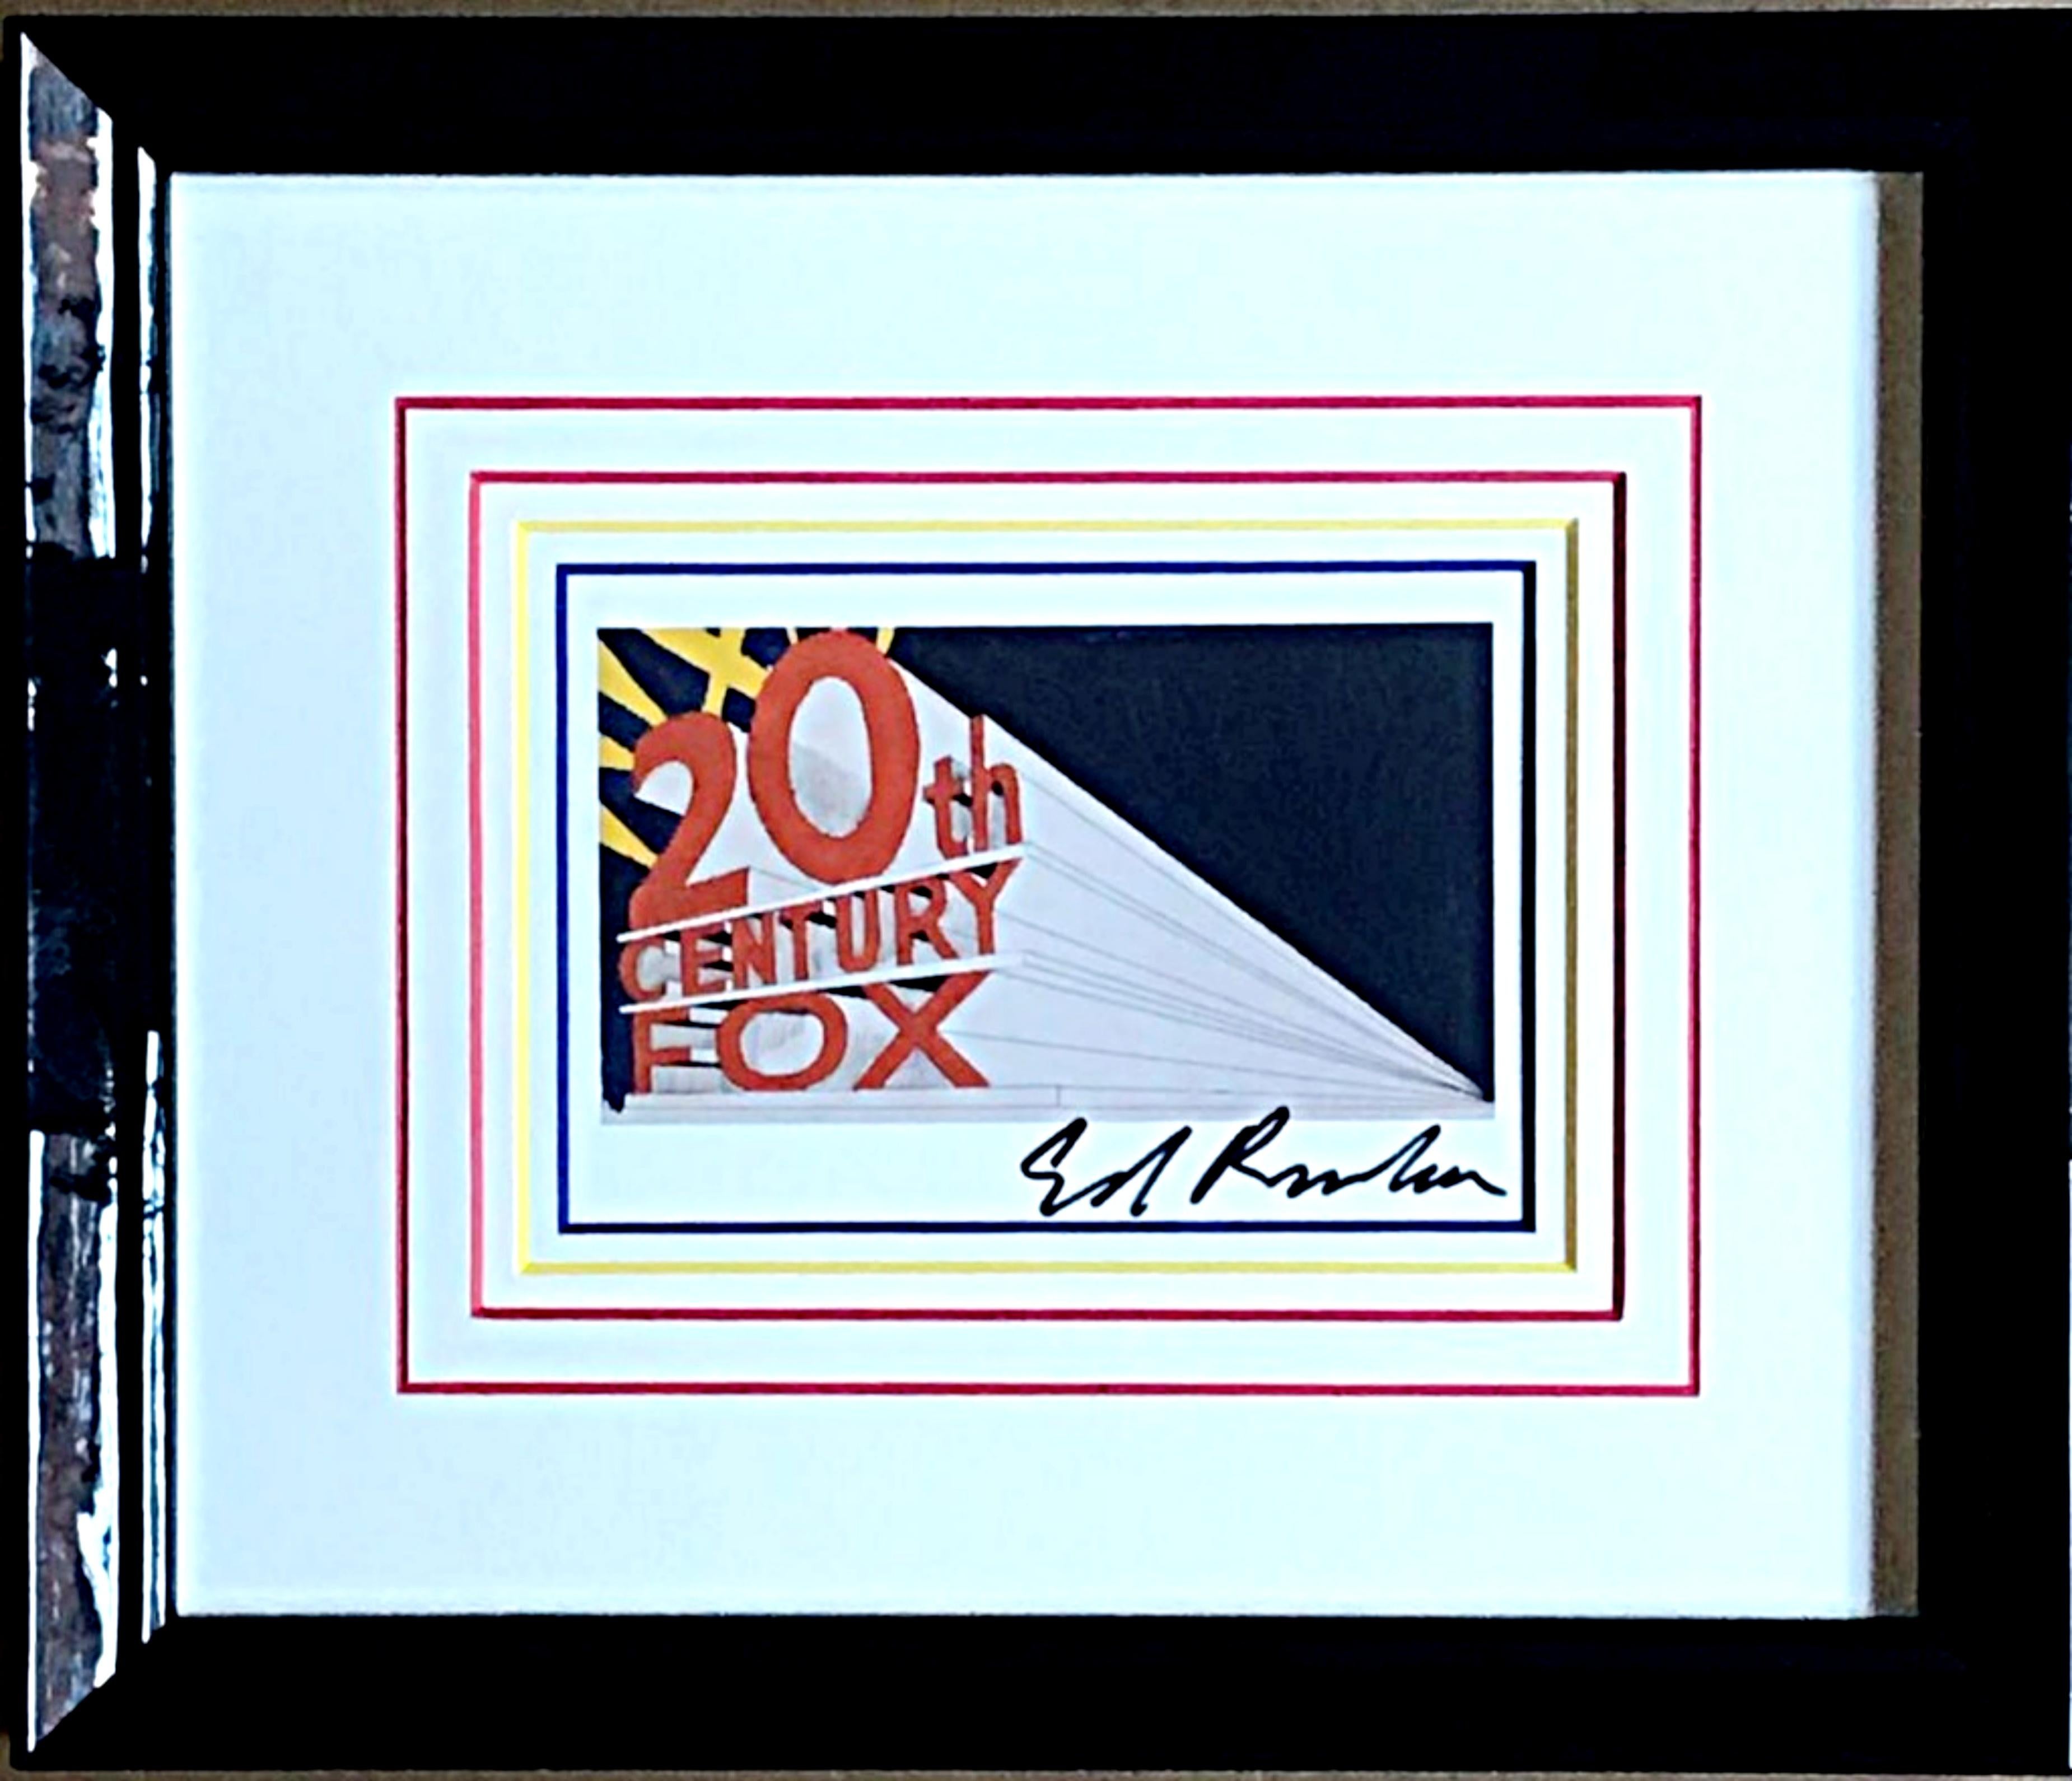 20th Century Fox (signé à la main) carte lithographique offset  - Print de Ed Ruscha